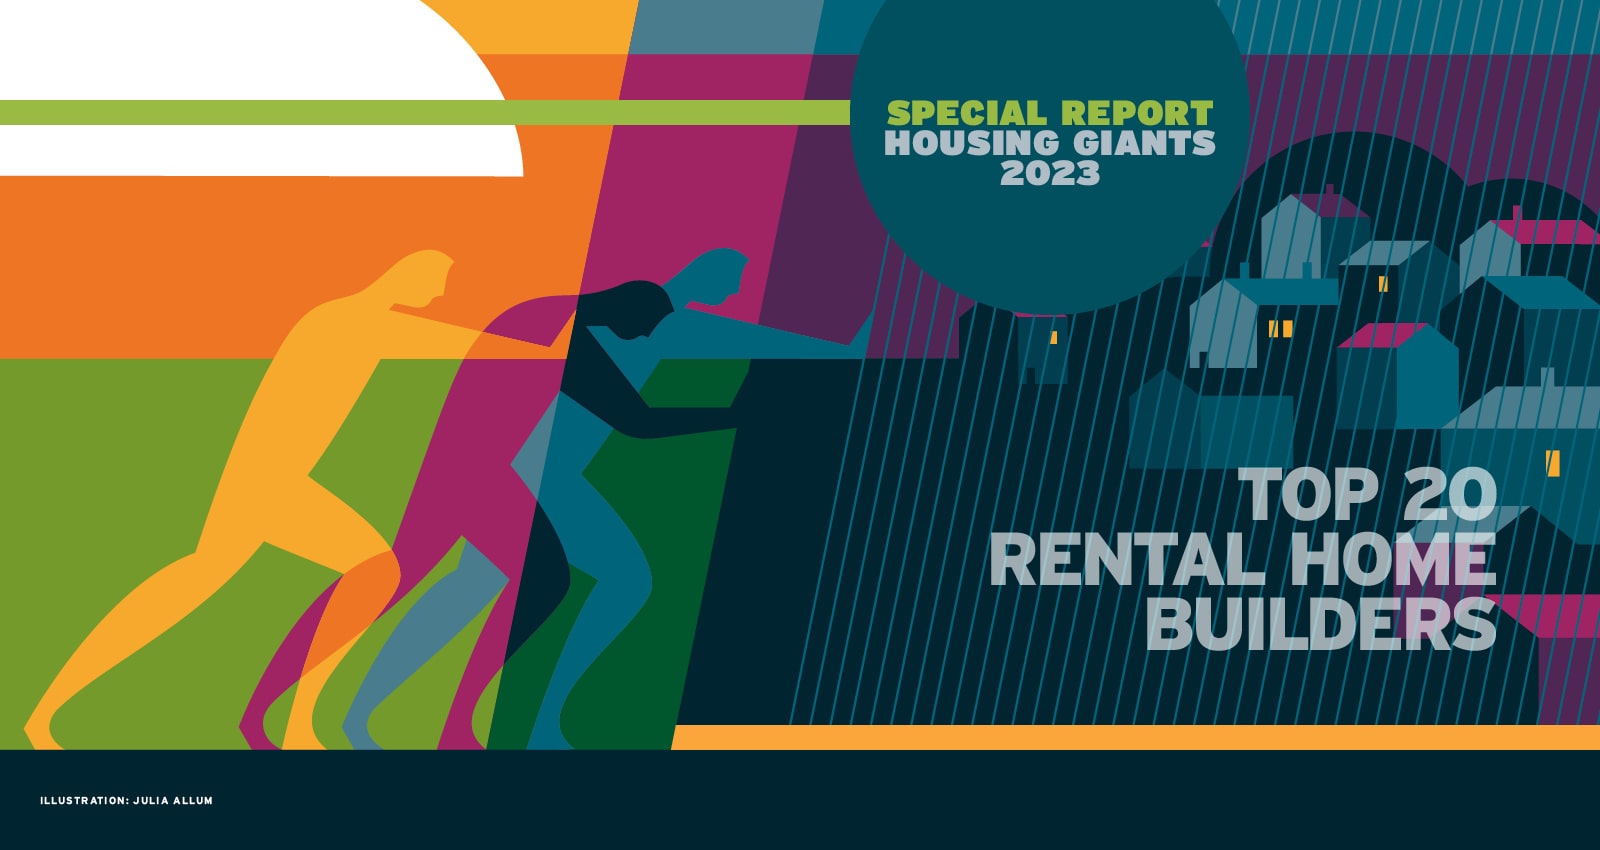 2023 Housing Giants ranked list of top 20 rental home builders